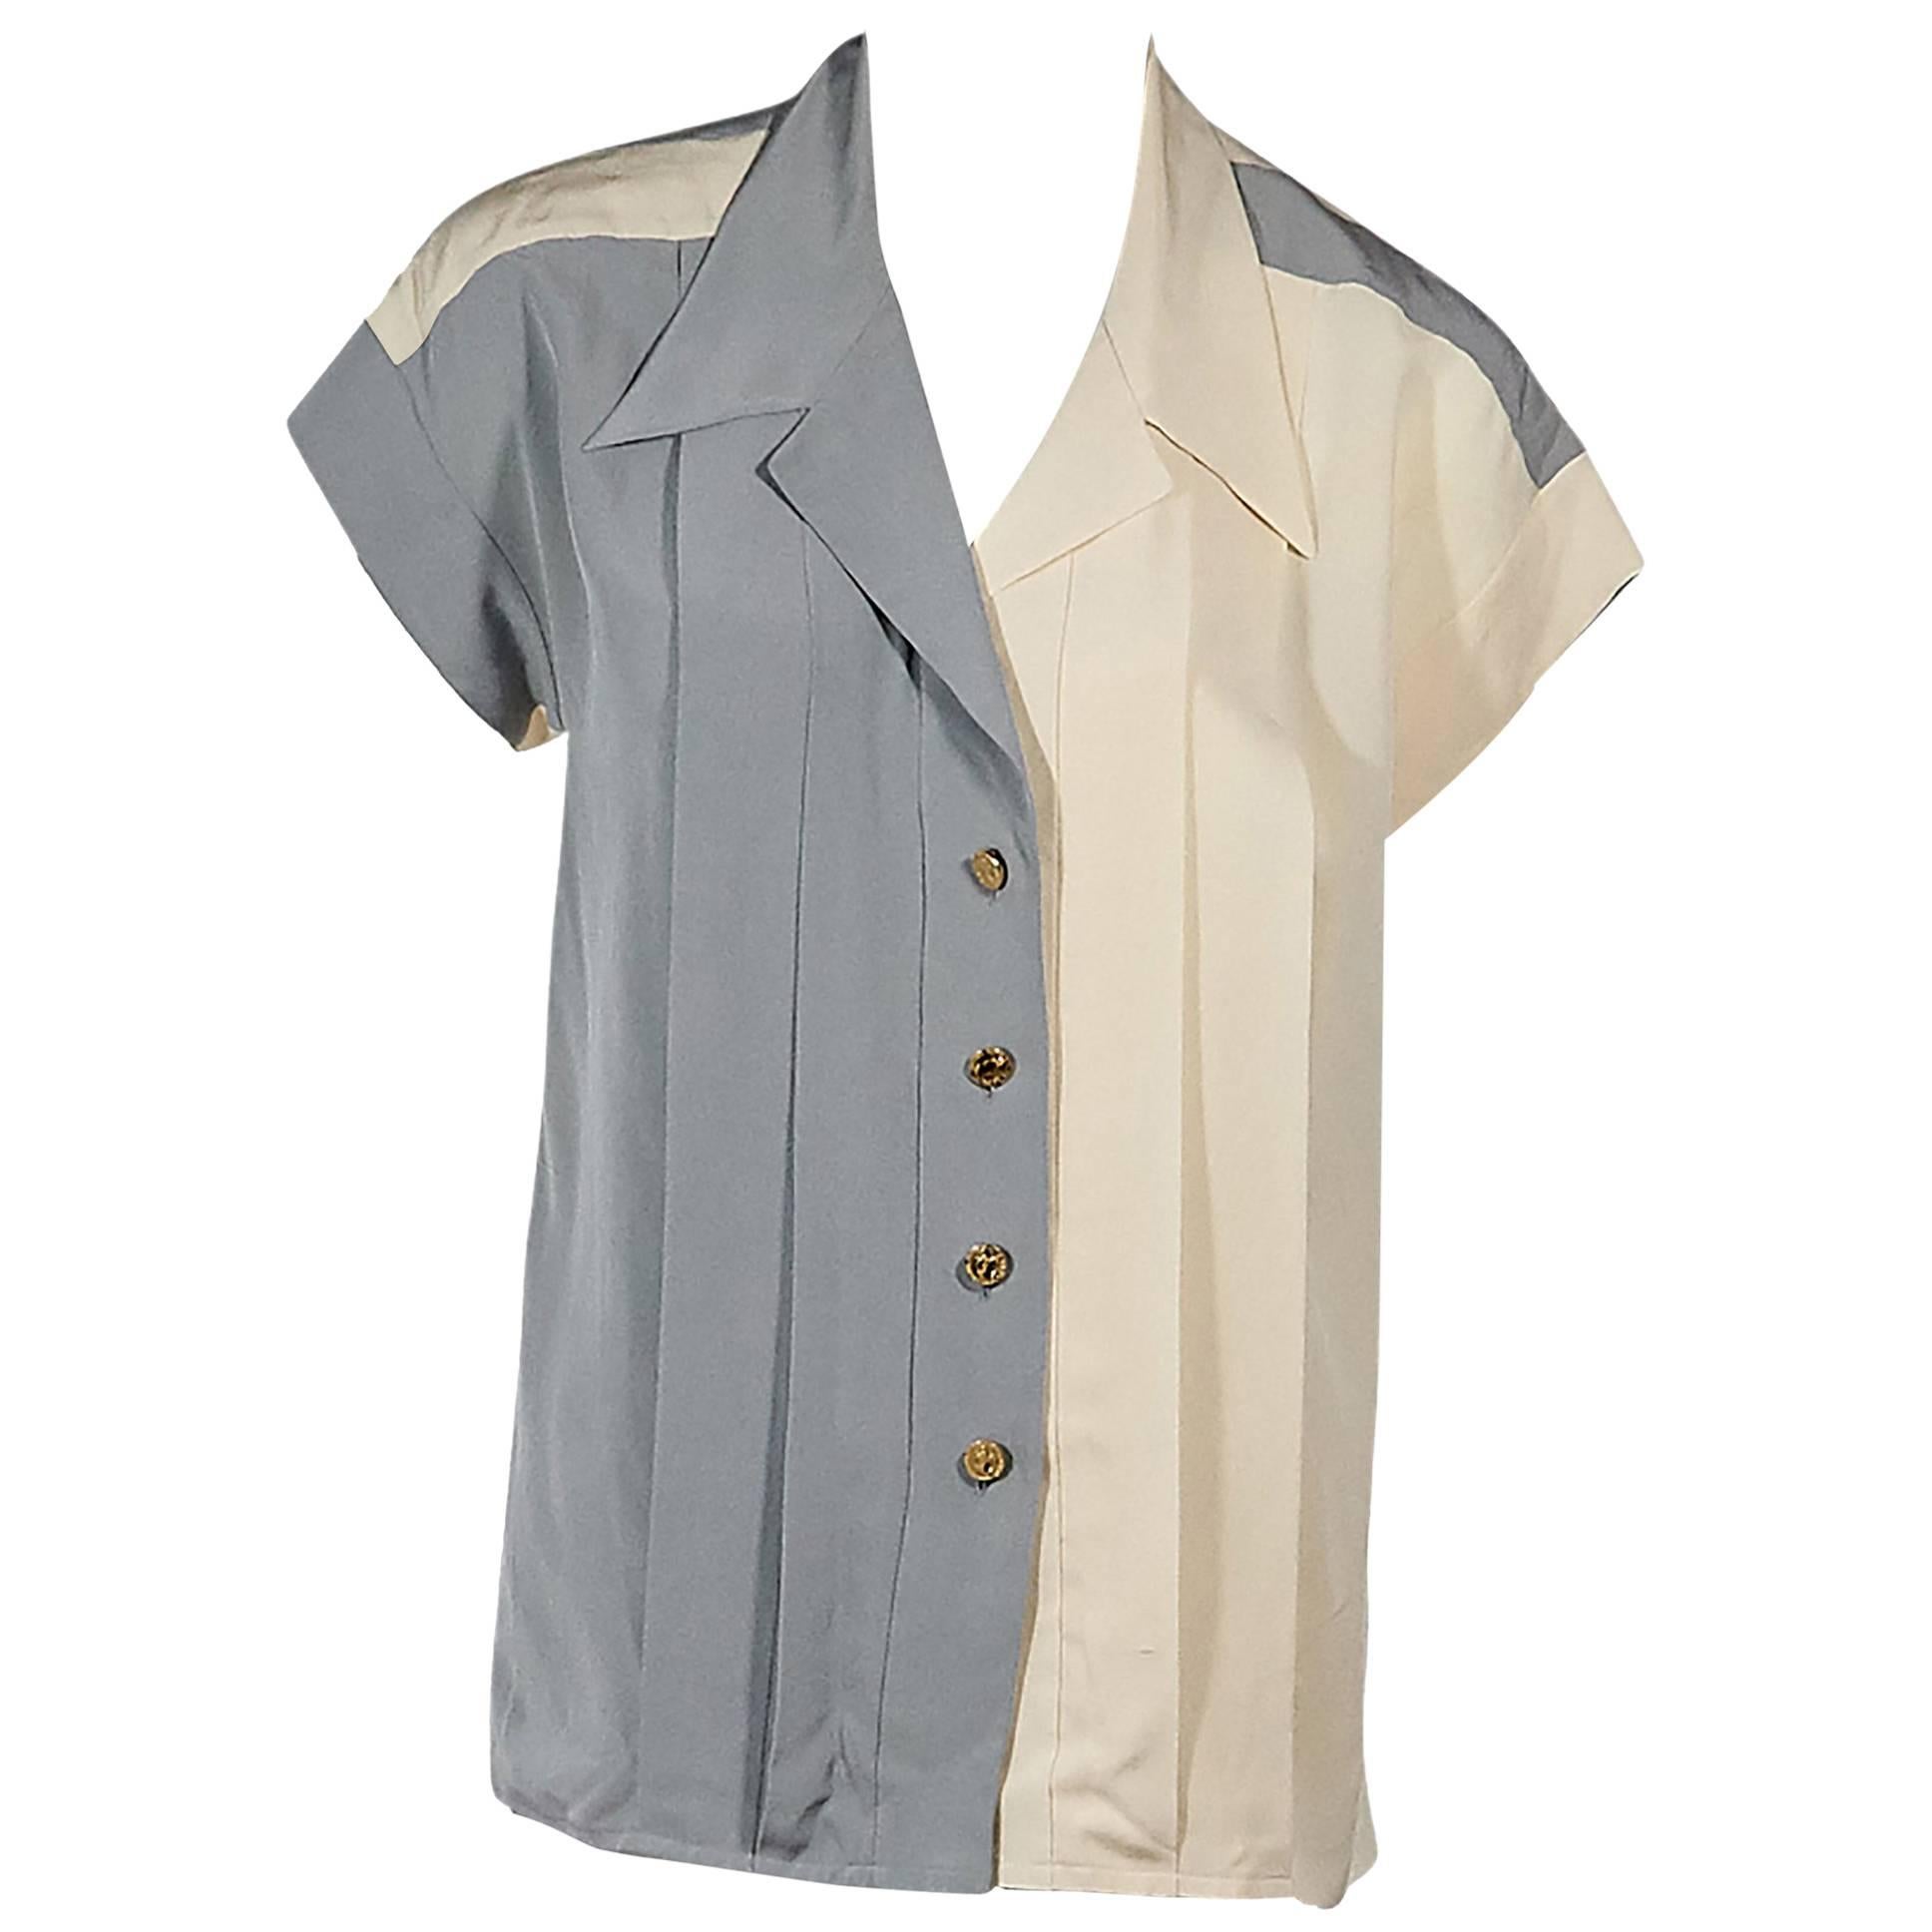 Tan & Grey Vintage Chanel Button-Front Shirt